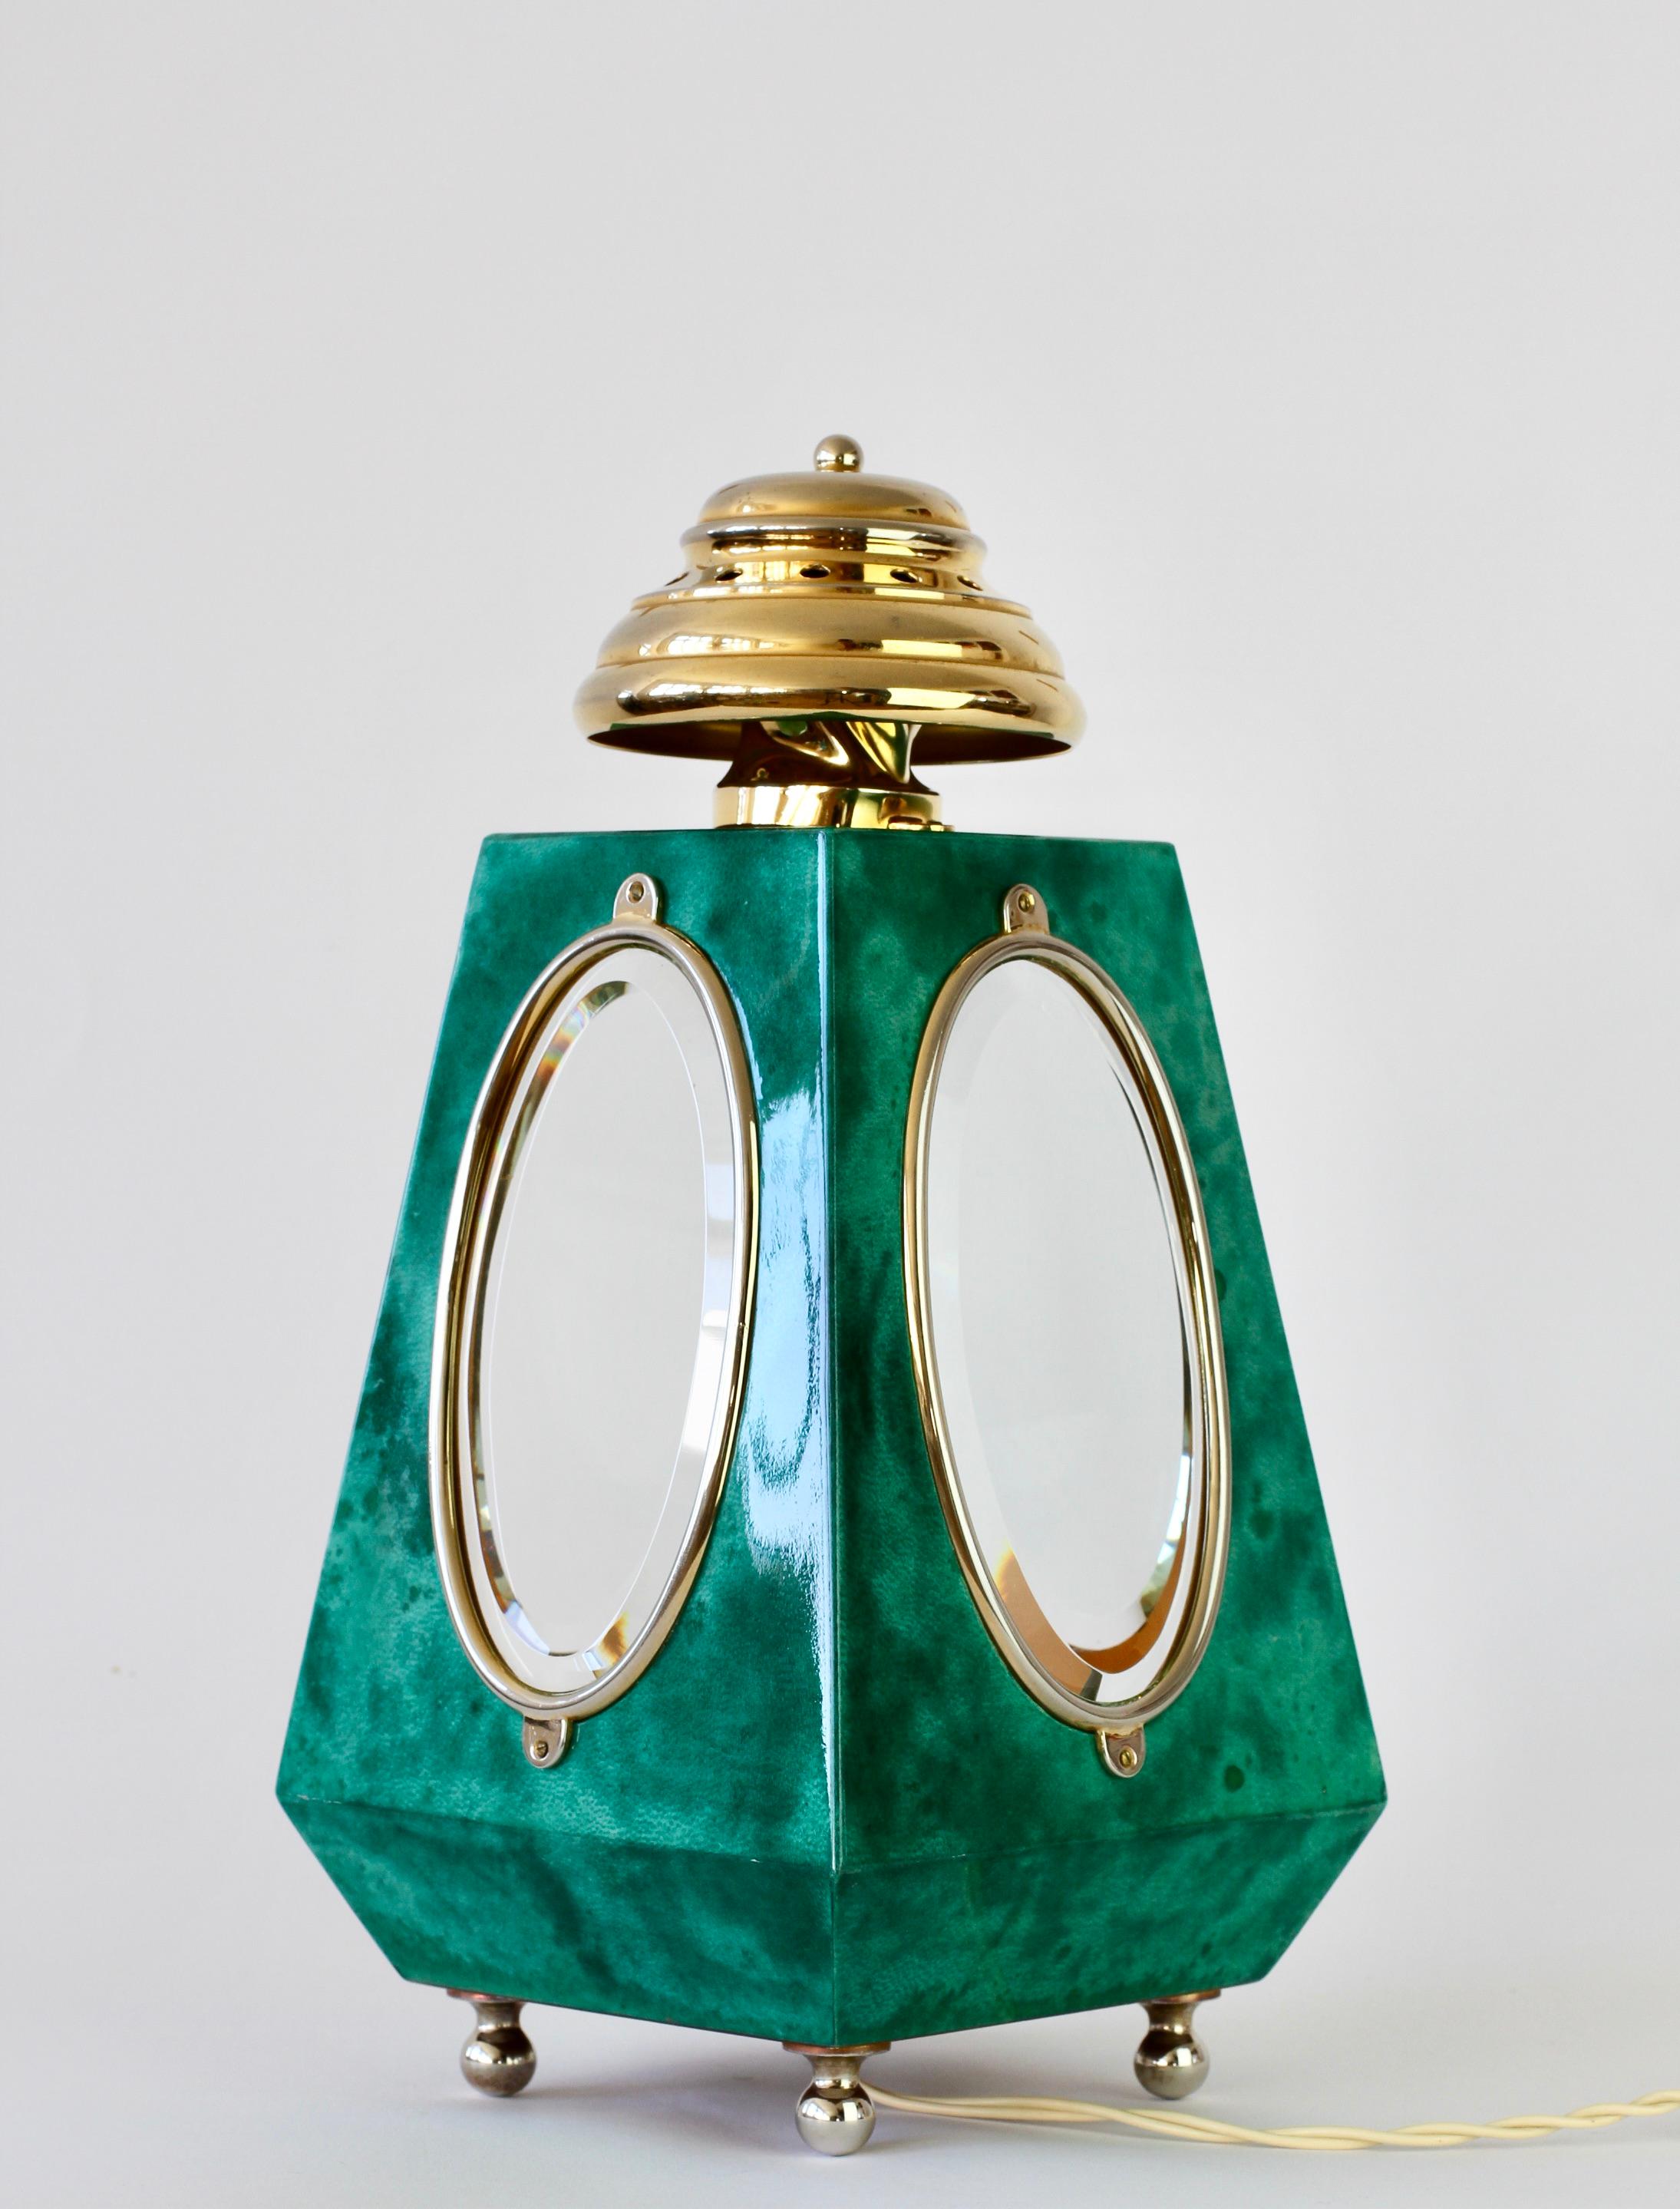 Aldo Tura 1960s Midcentury Table Lamp / Lantern in Green Italian Goatskin 7